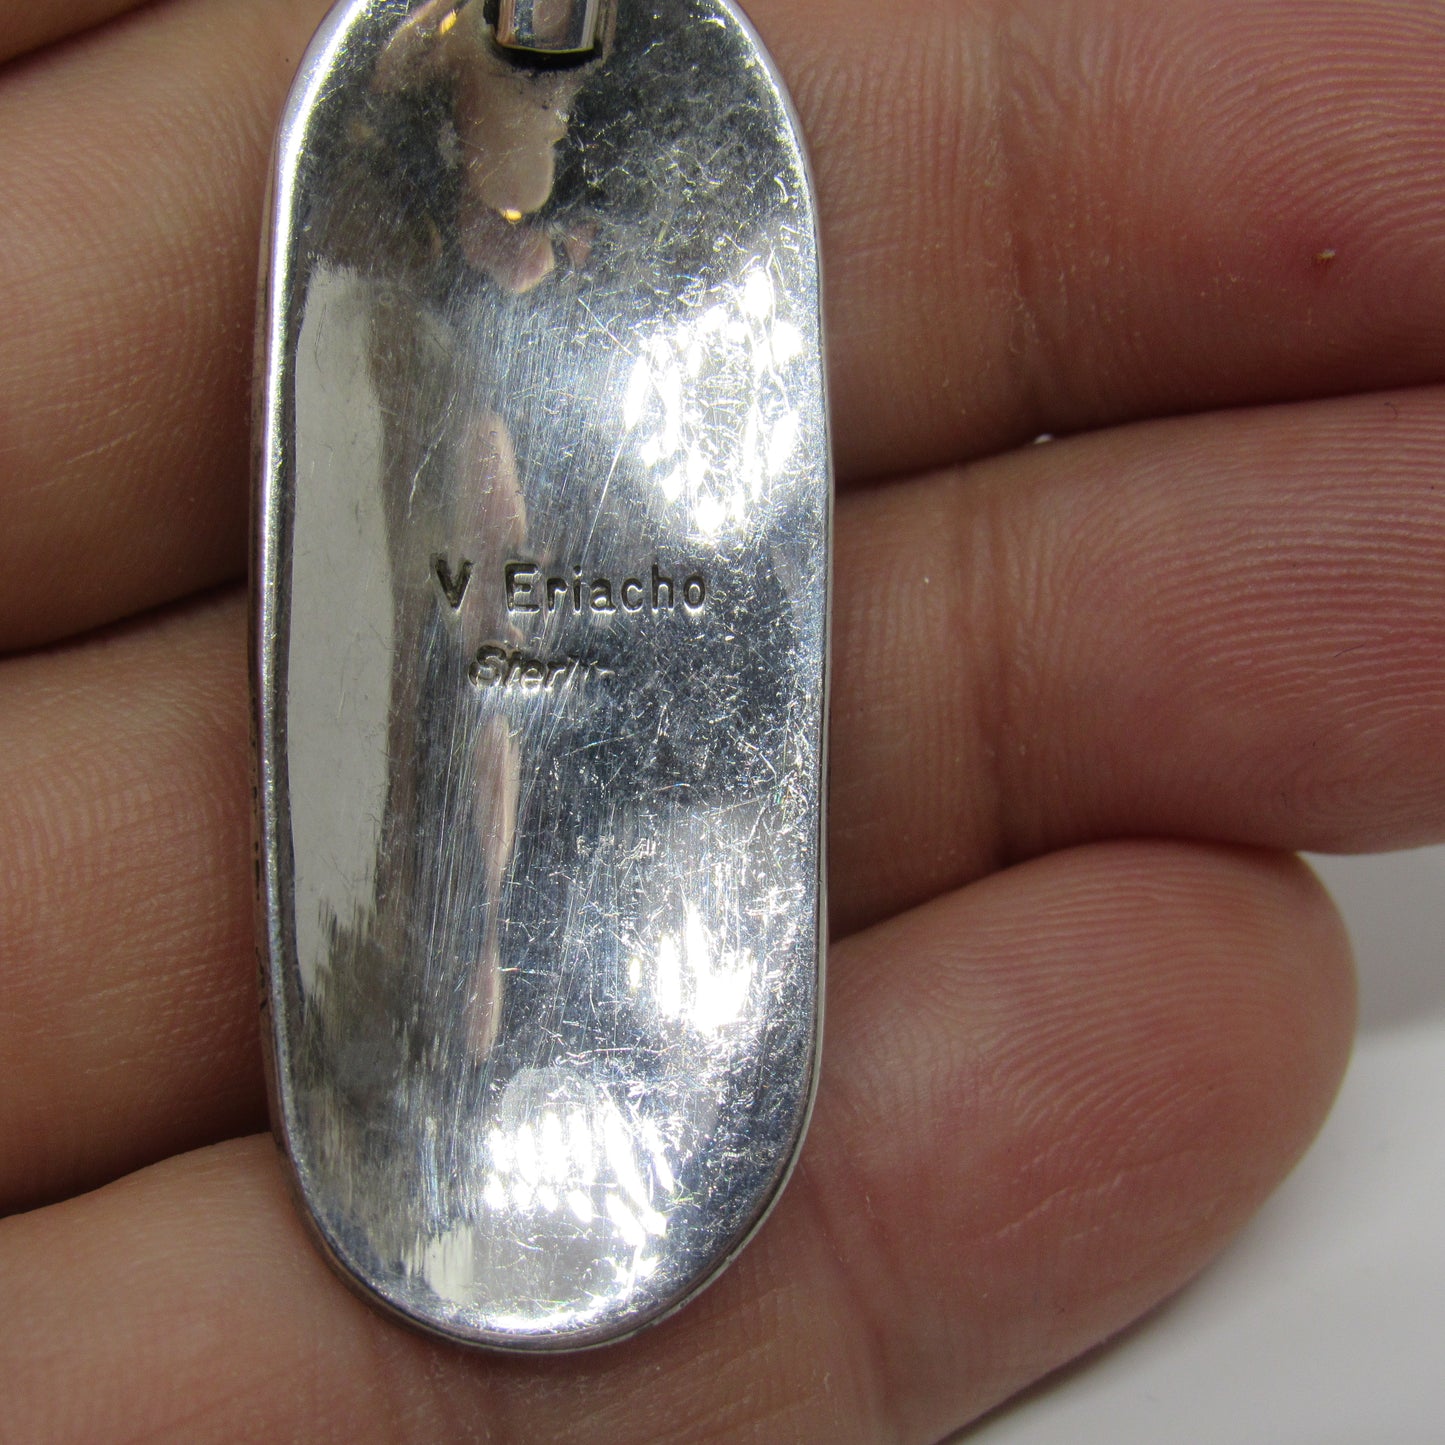 Viola Eriacho Zuni Sterling Silver Kokopelli Pendant - 2 inch